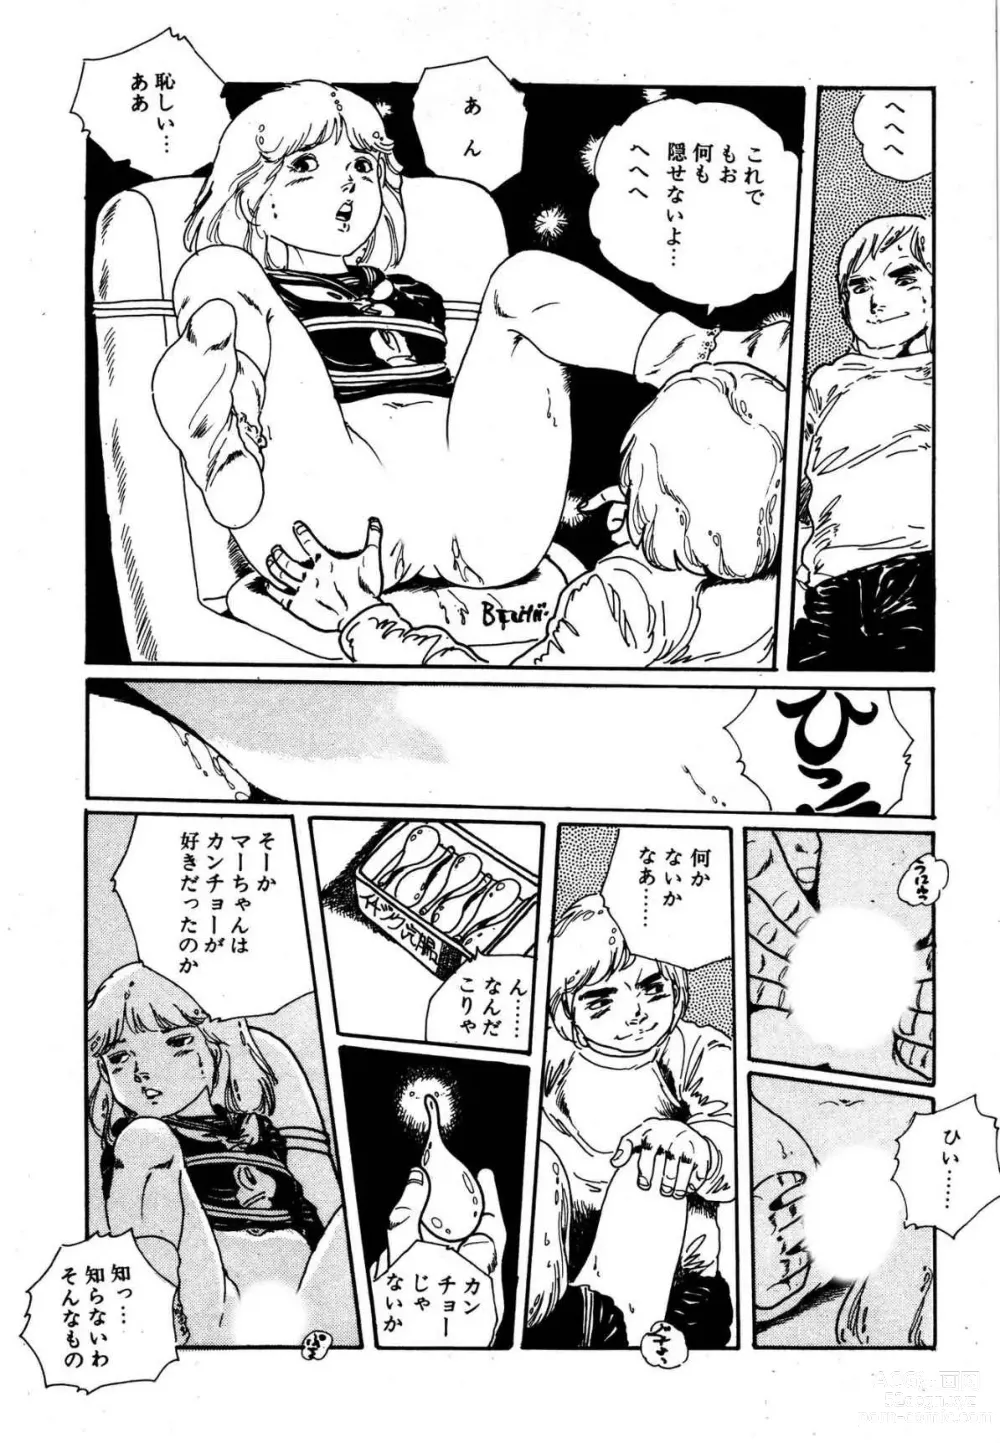 Page 13 of manga Dreaming fairy